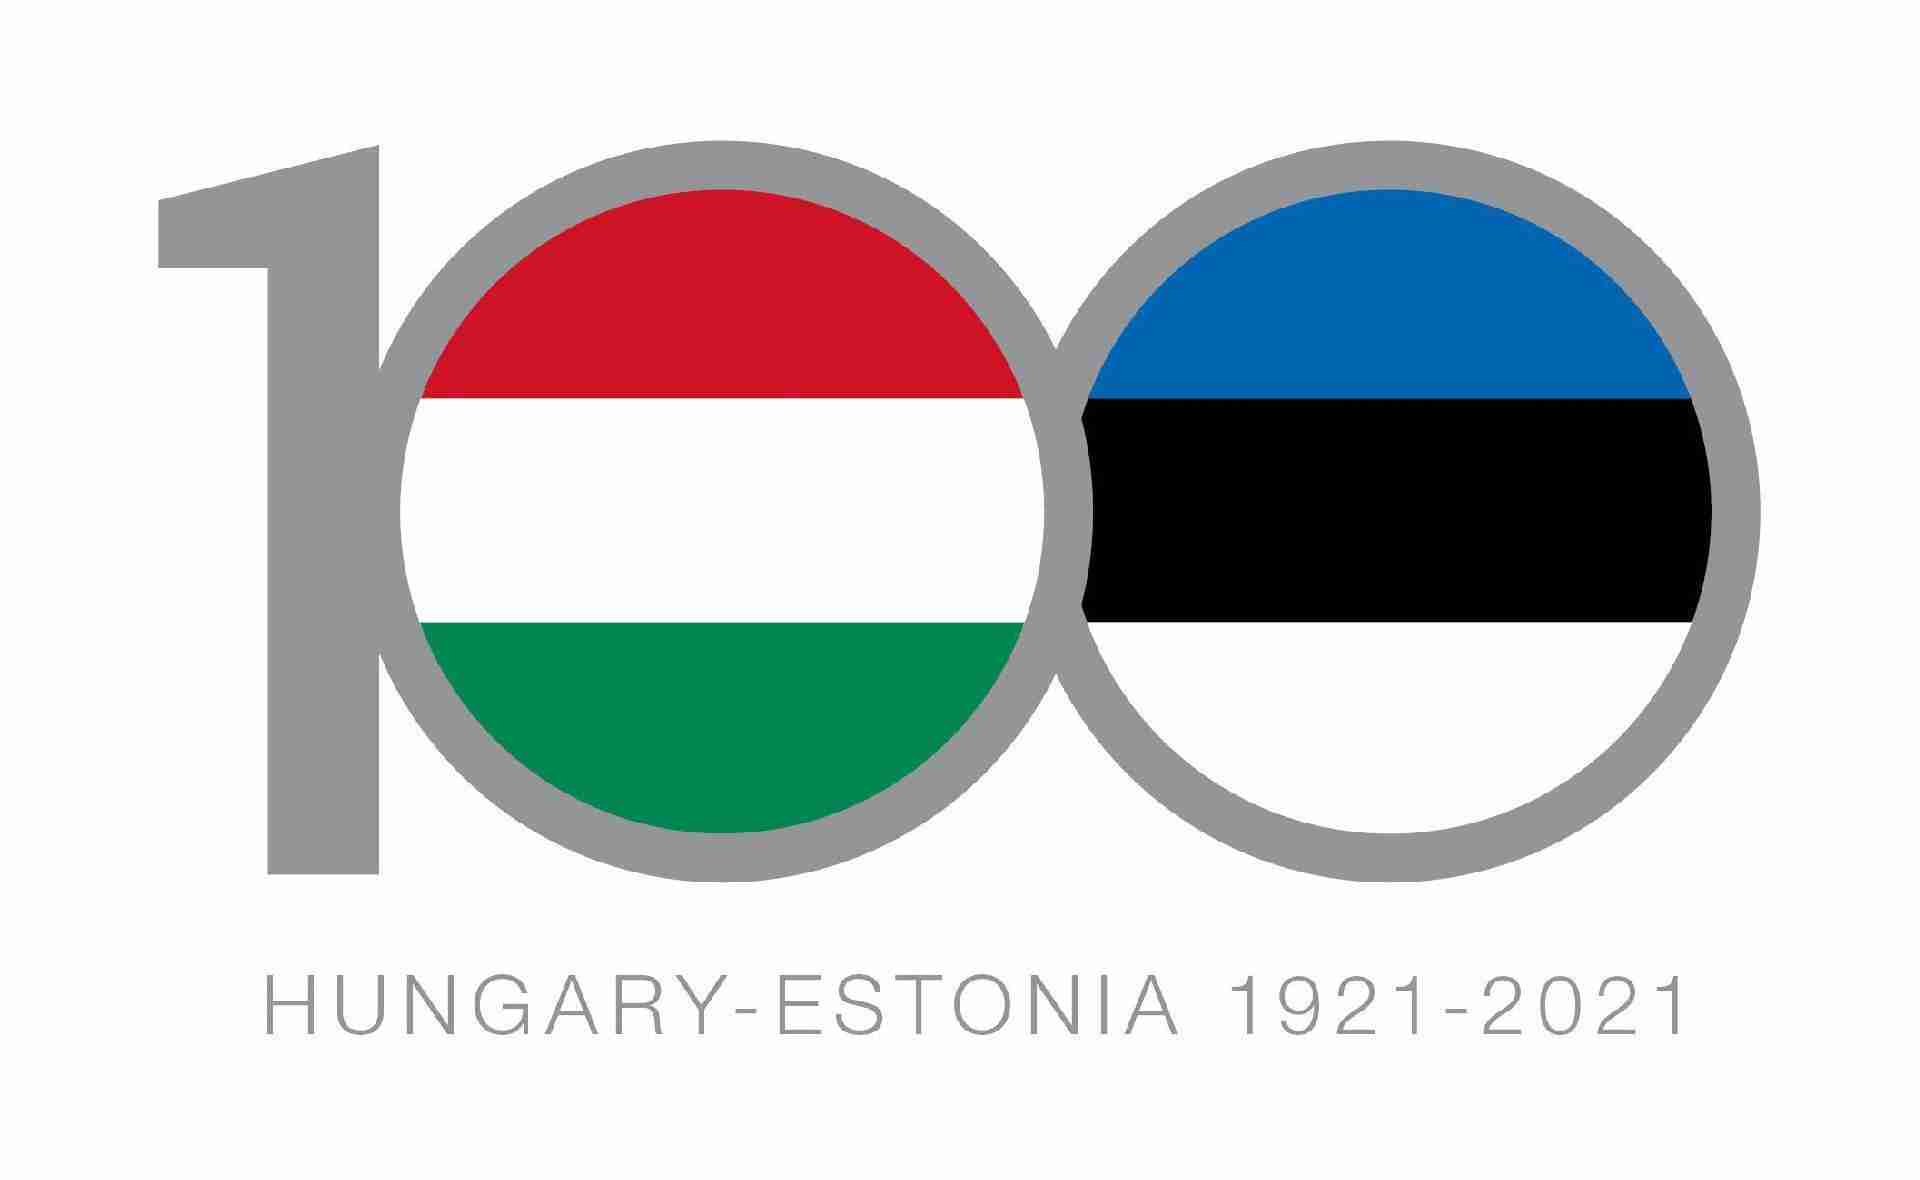 Hungarian-Estonian logo for the centenary of diplomatic relations